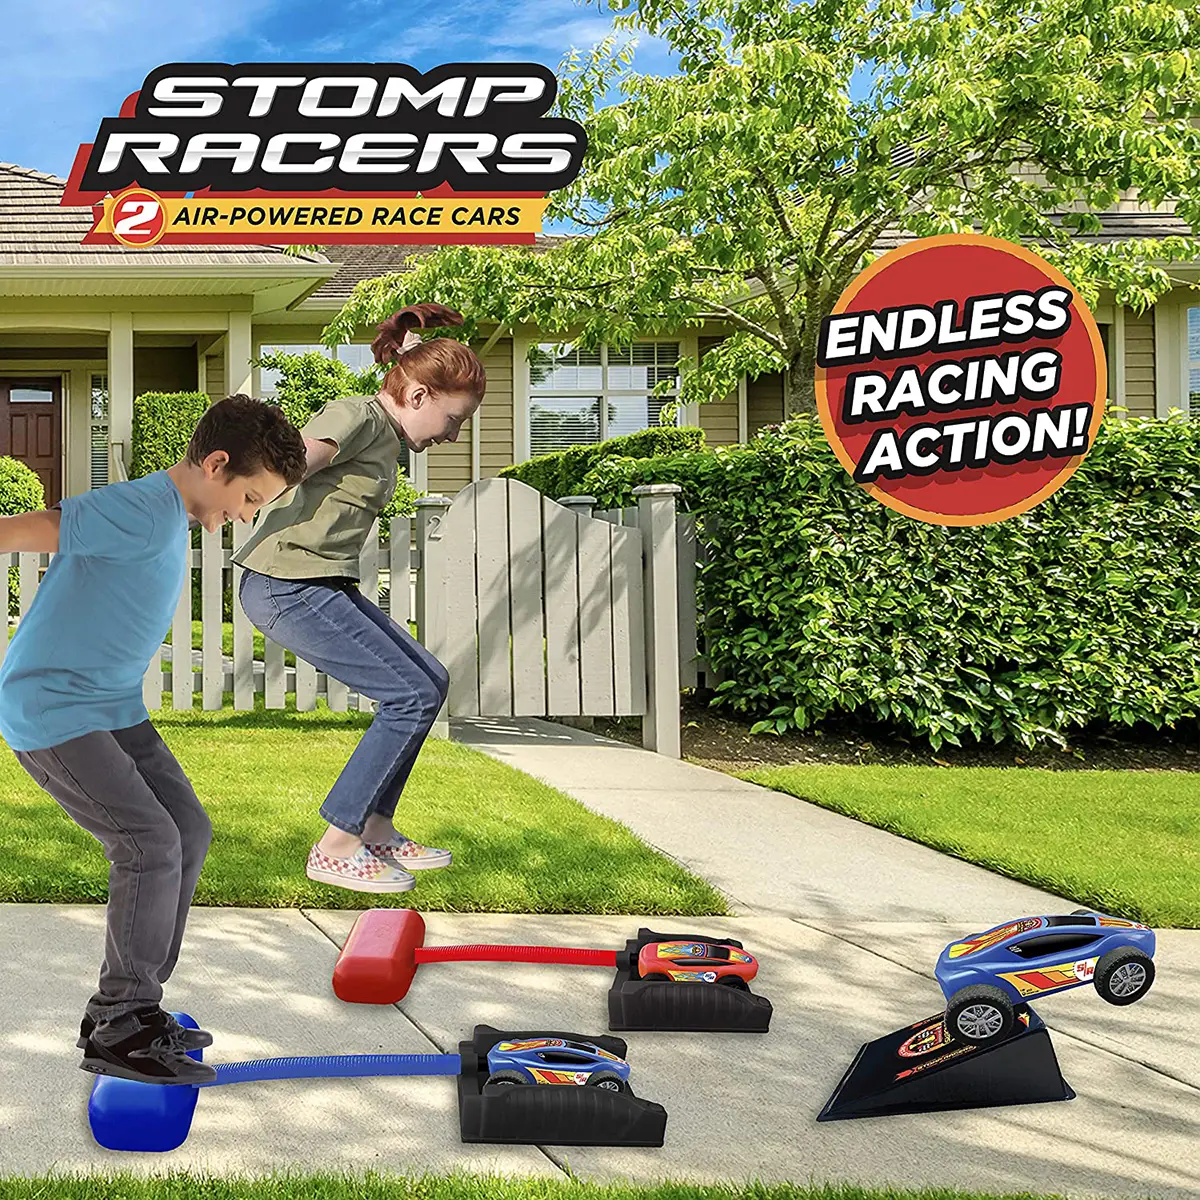 Stomp Rocket Original Stomp Racers Dueling Car Launcher For Kids of Age 5Y+, Multicolour